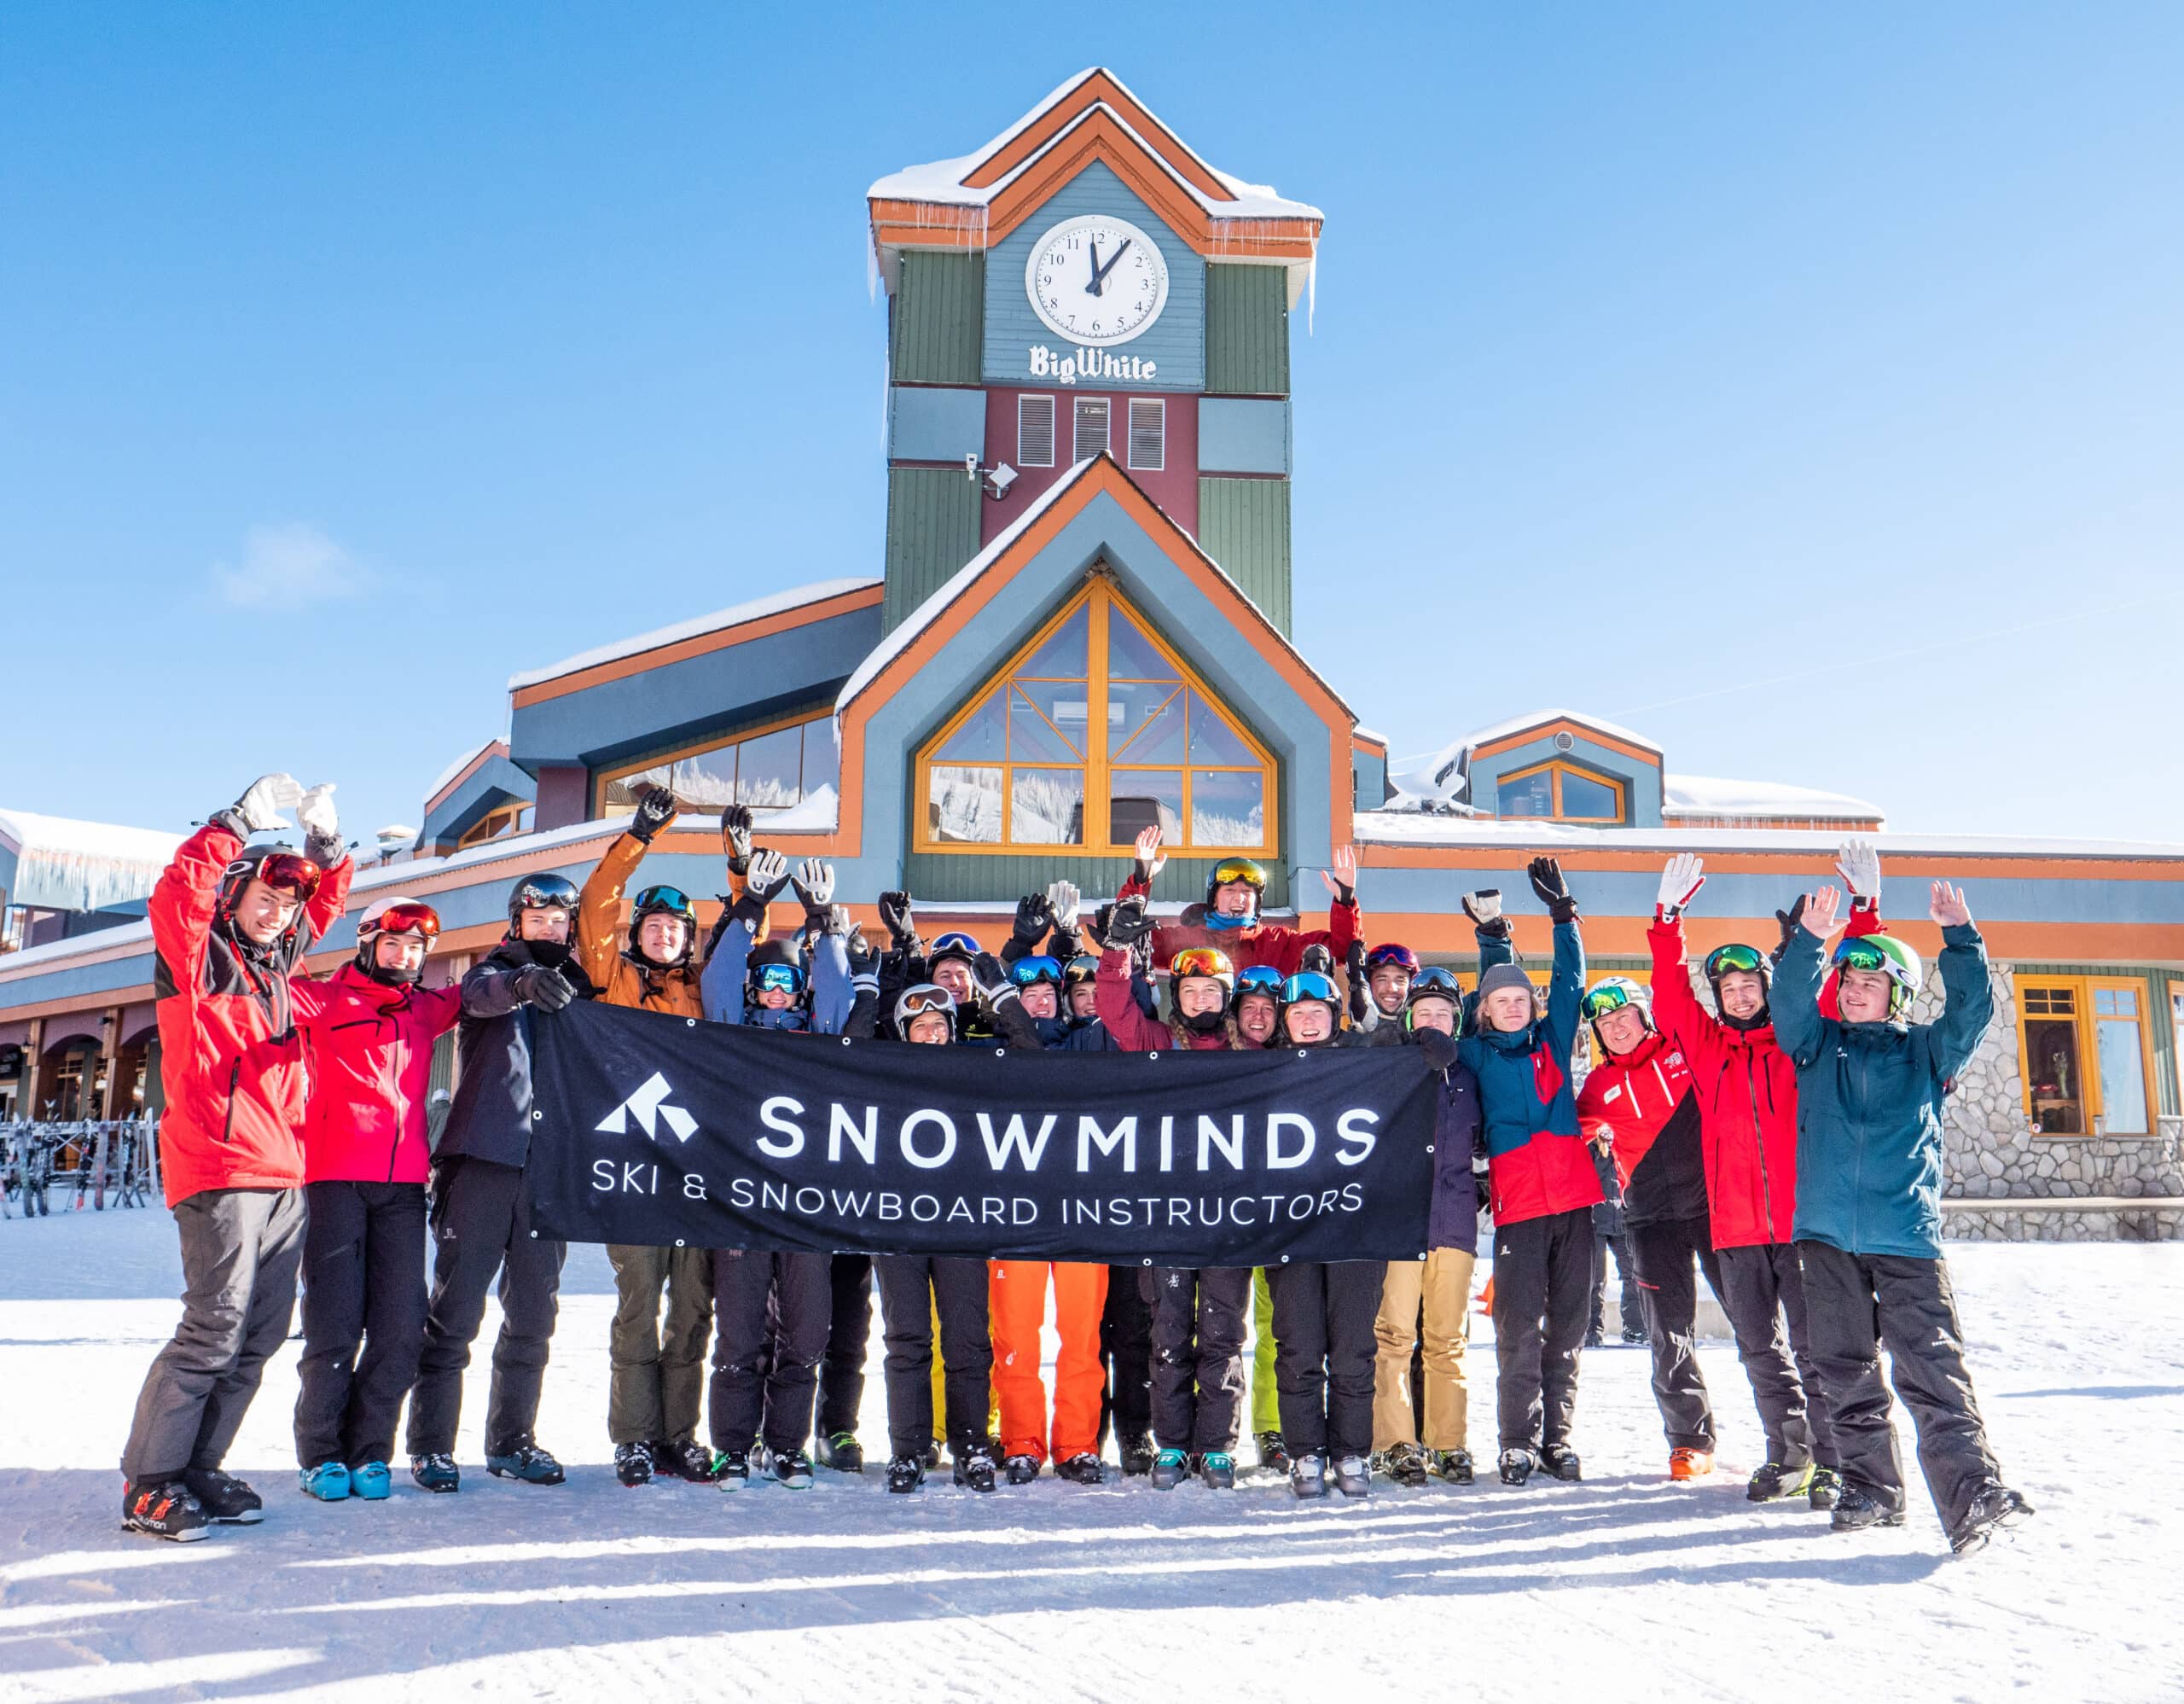 Bliv Skiinstruktør med Snowminds